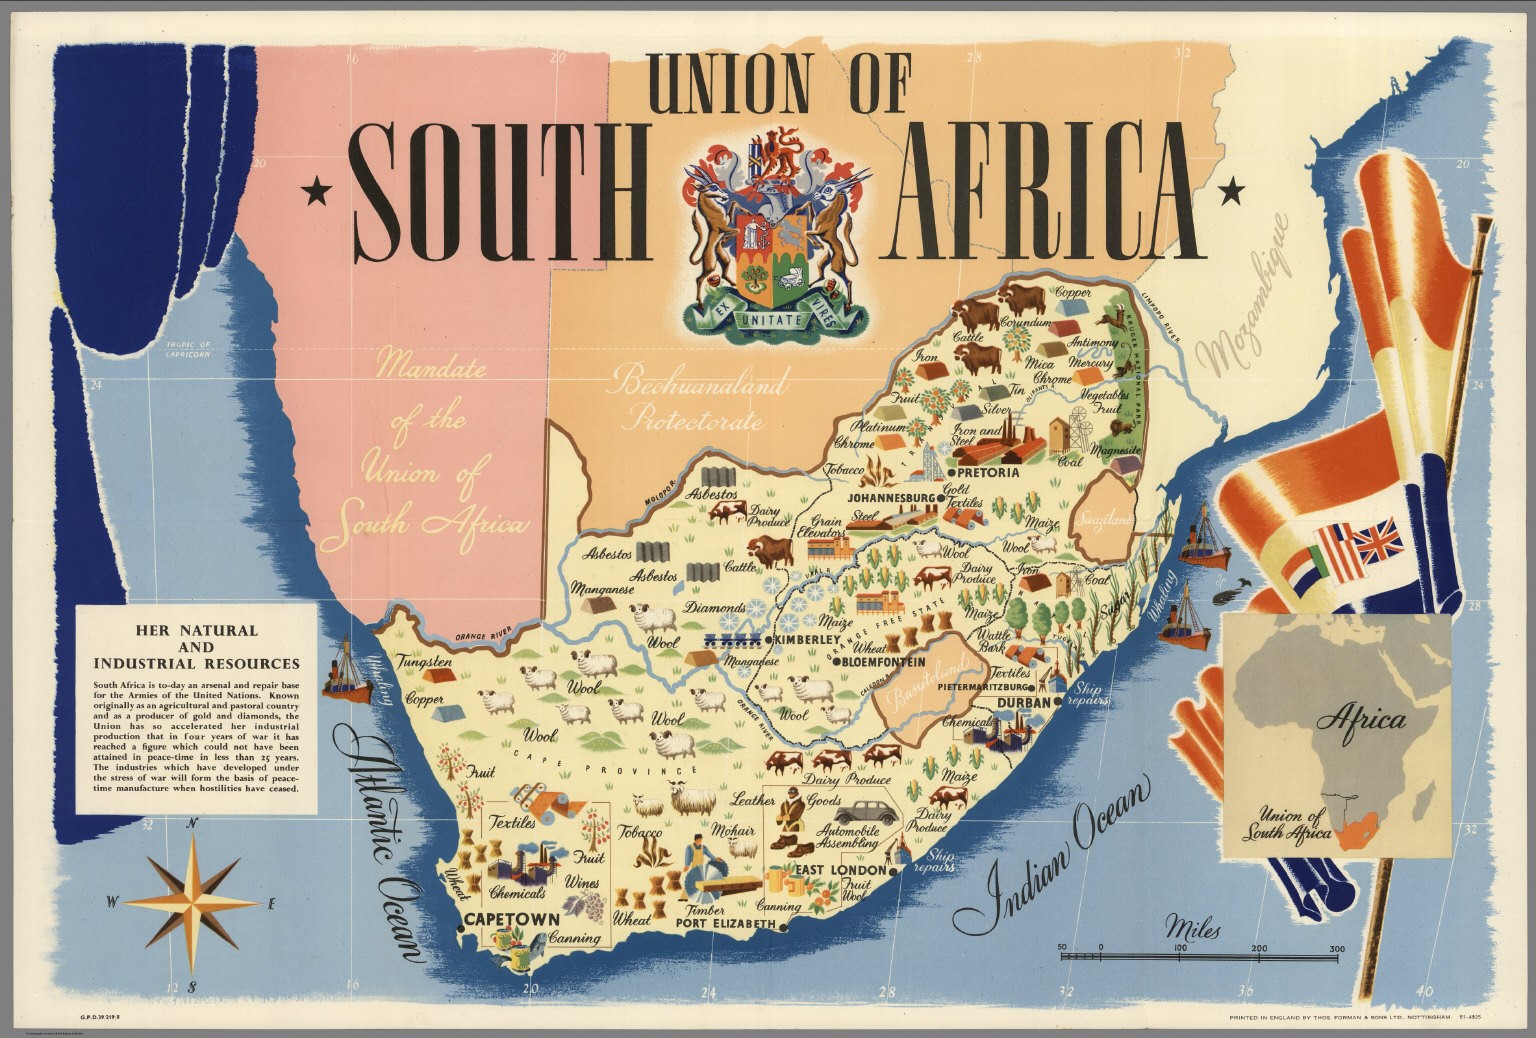 Founding Origins of South Africa